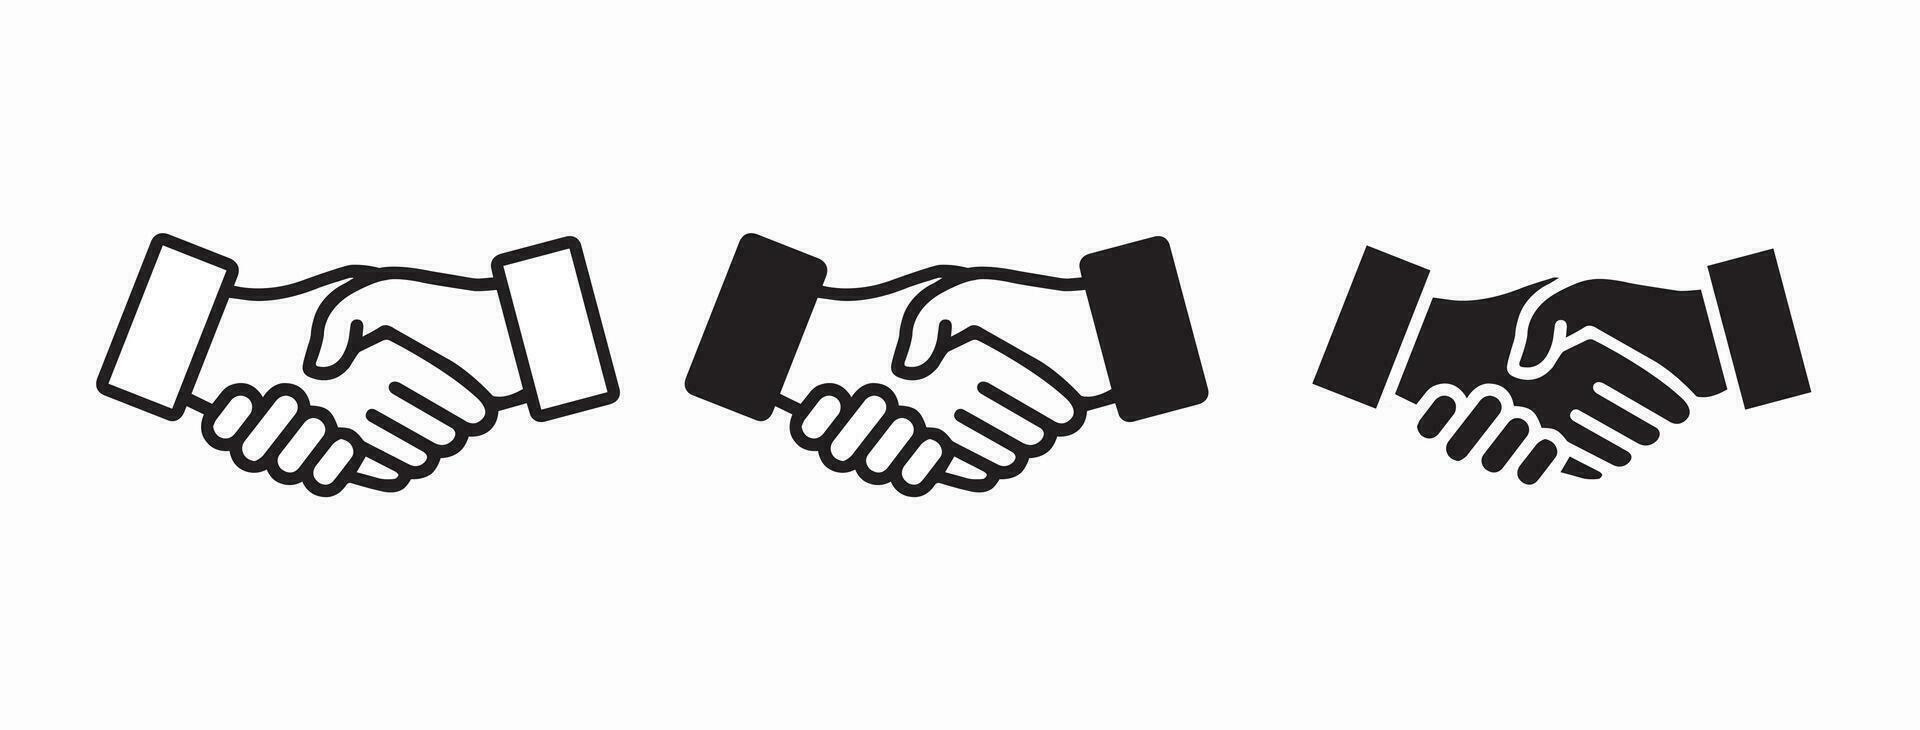 Business handshake vector icon Free Vector